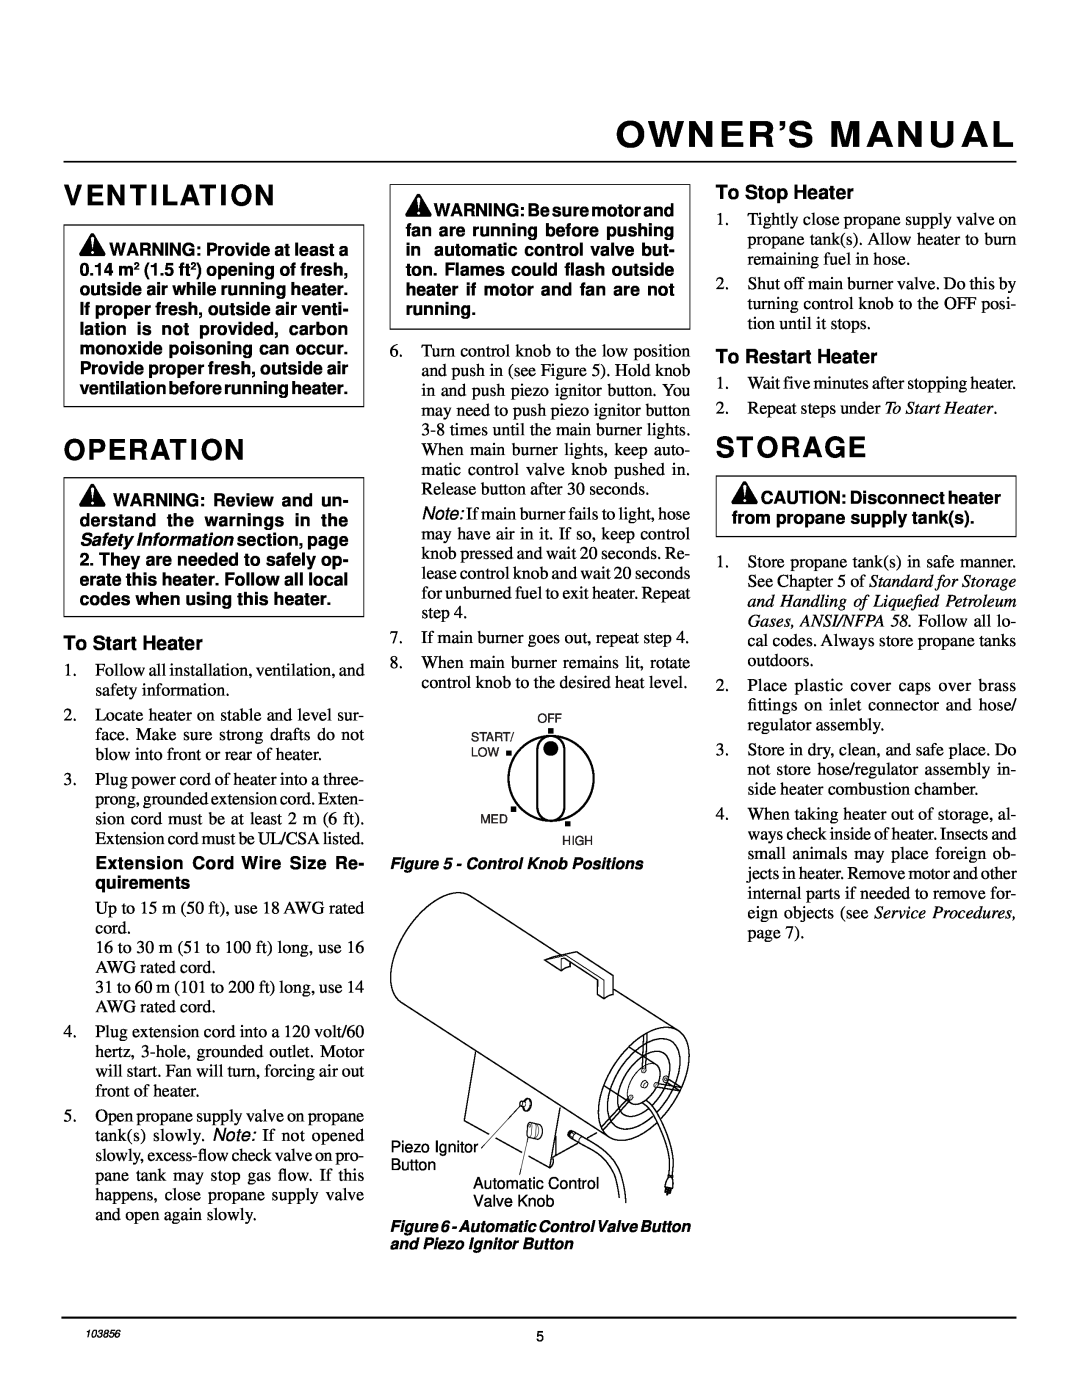 Desa RCLP50V owner manual Ventilation, Operation, Storage, To Start Heater, To Stop Heater, To Restart Heater 